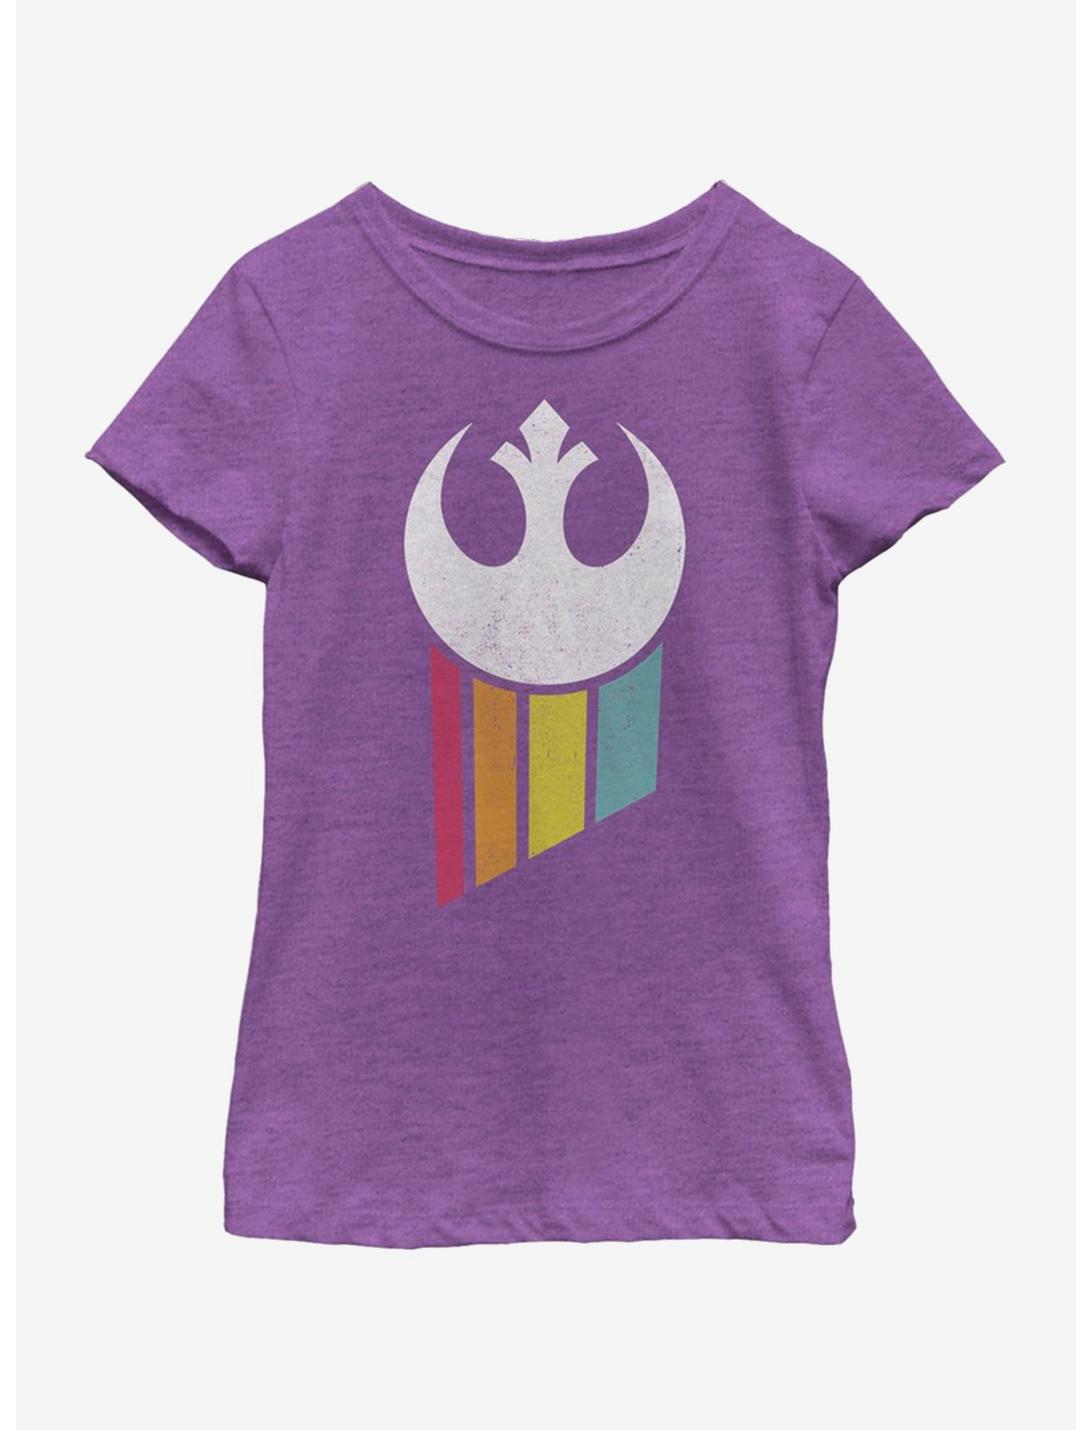 Star Wars Rainbow Rebel Logo Youth Girls T-Shirt, PURPLE BERRY, hi-res